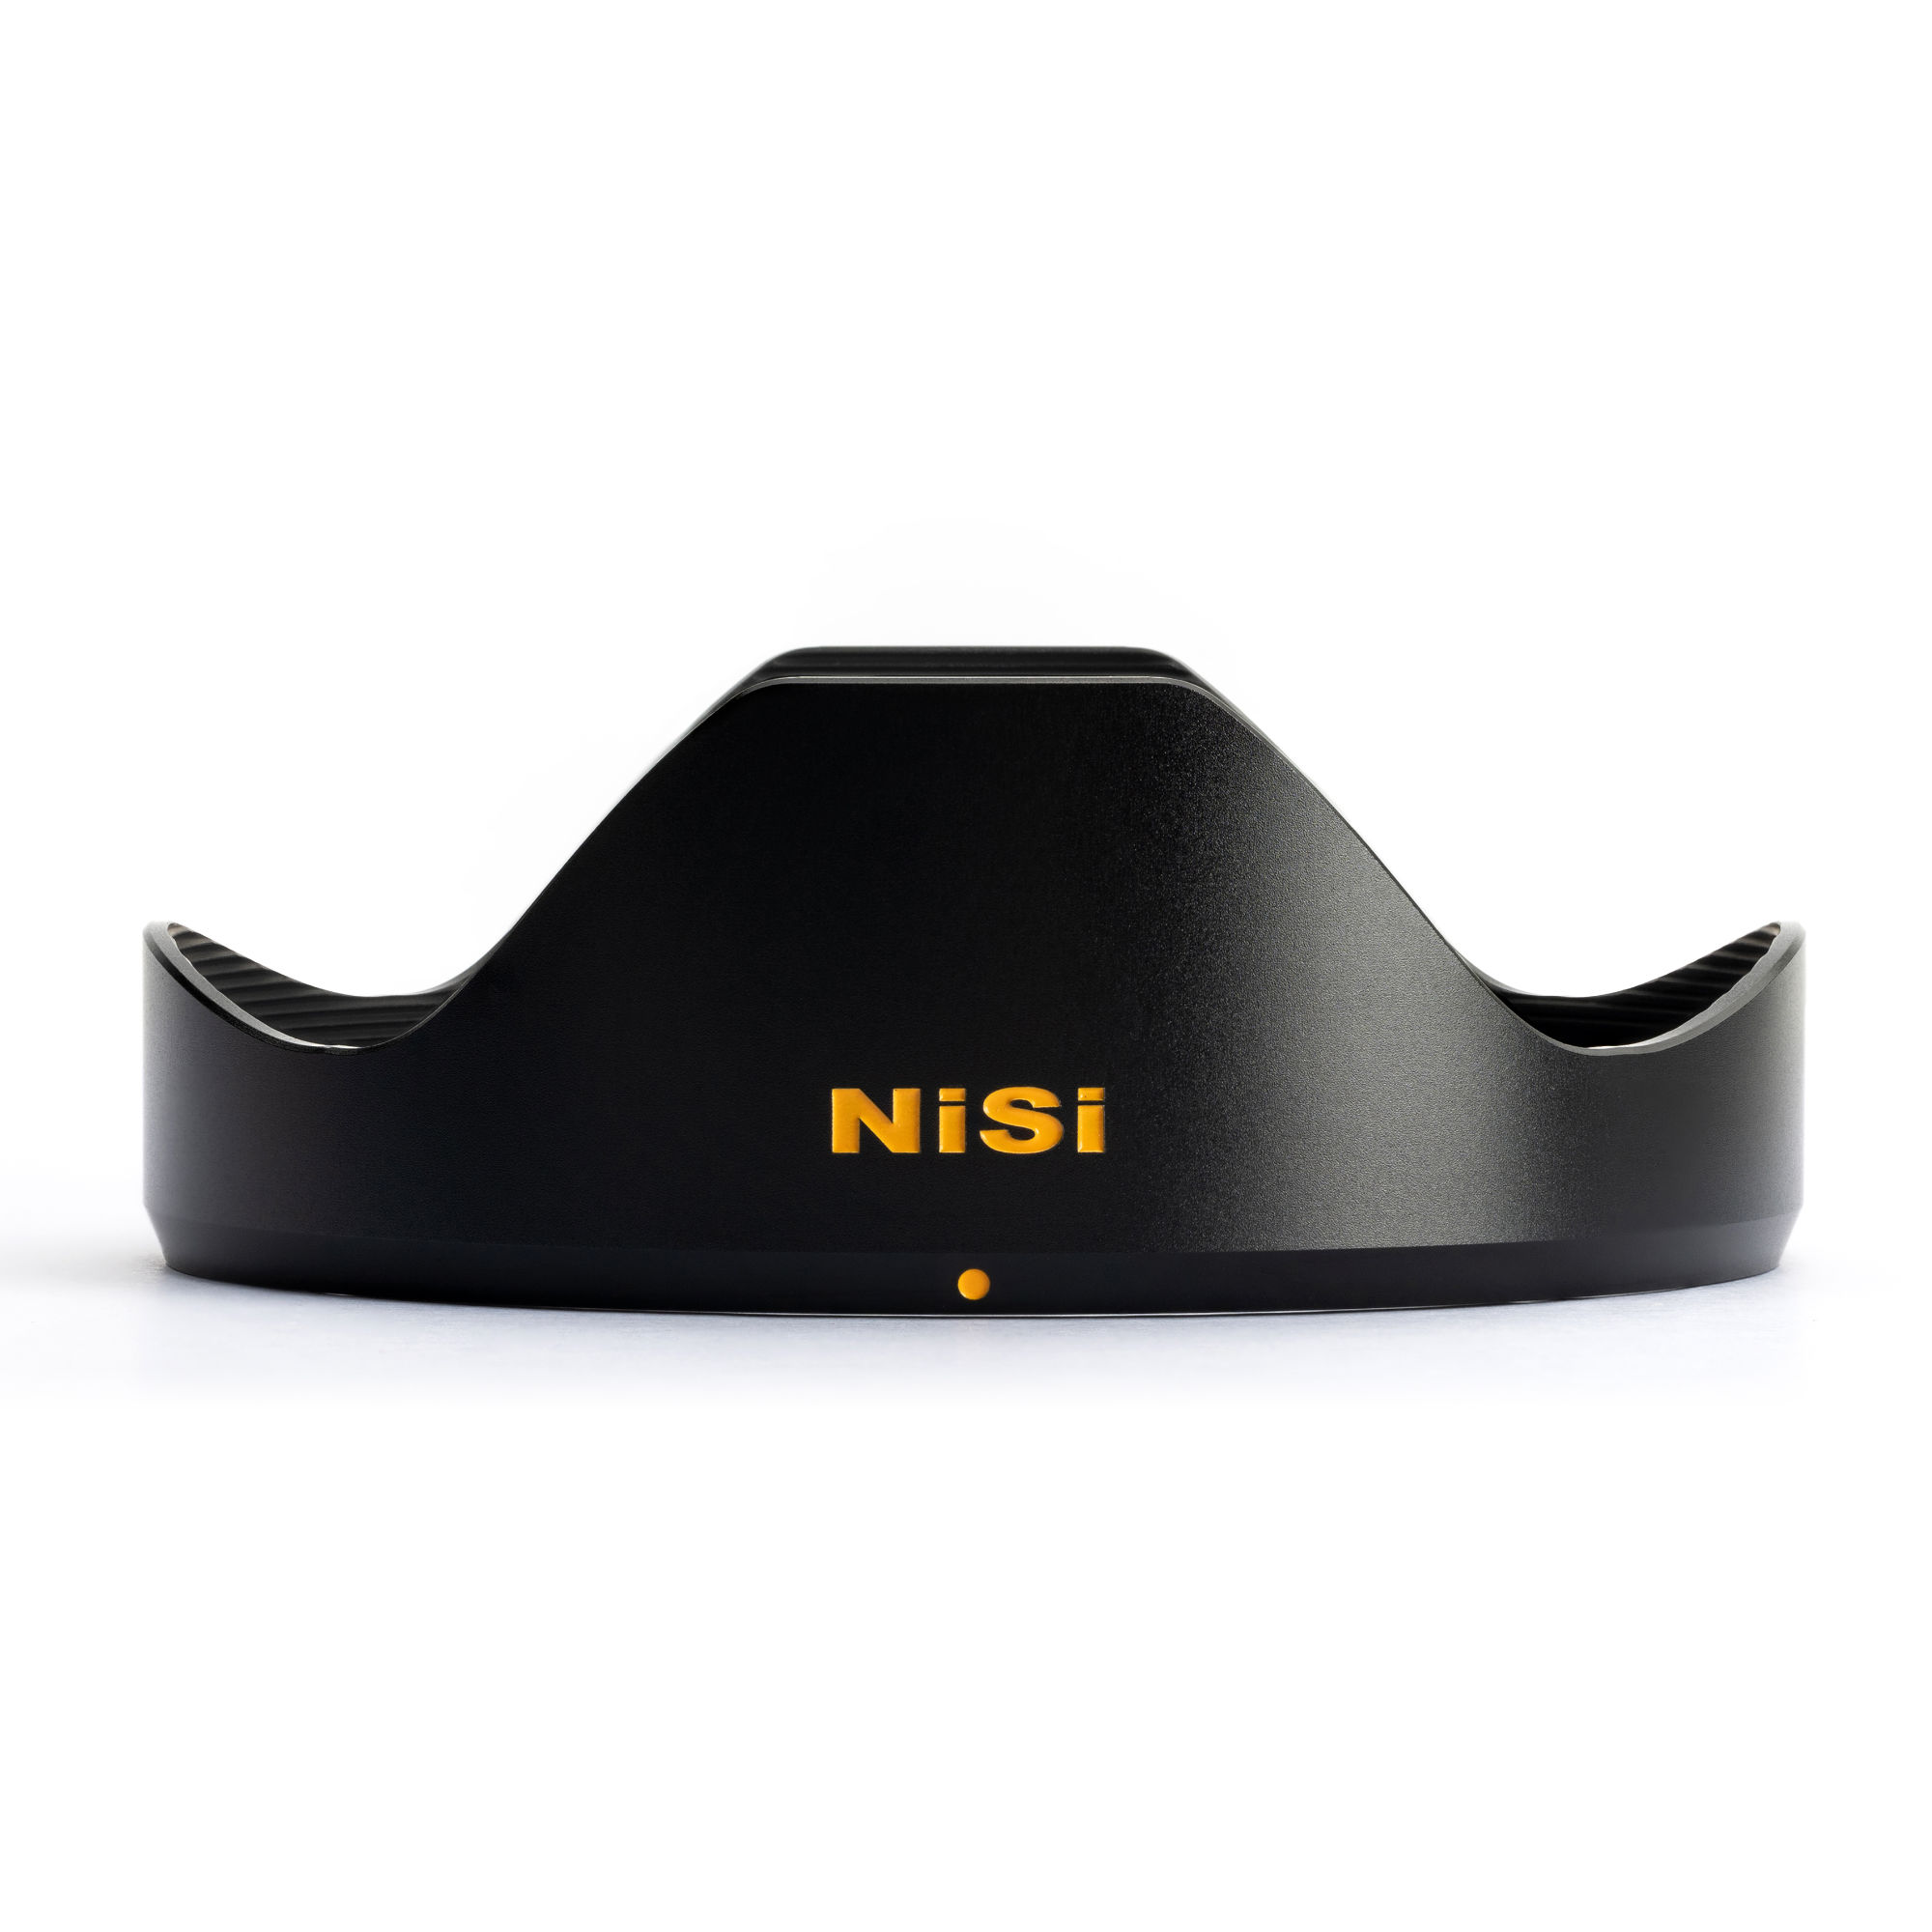 NiSi-15mm-f4-hood.jpg